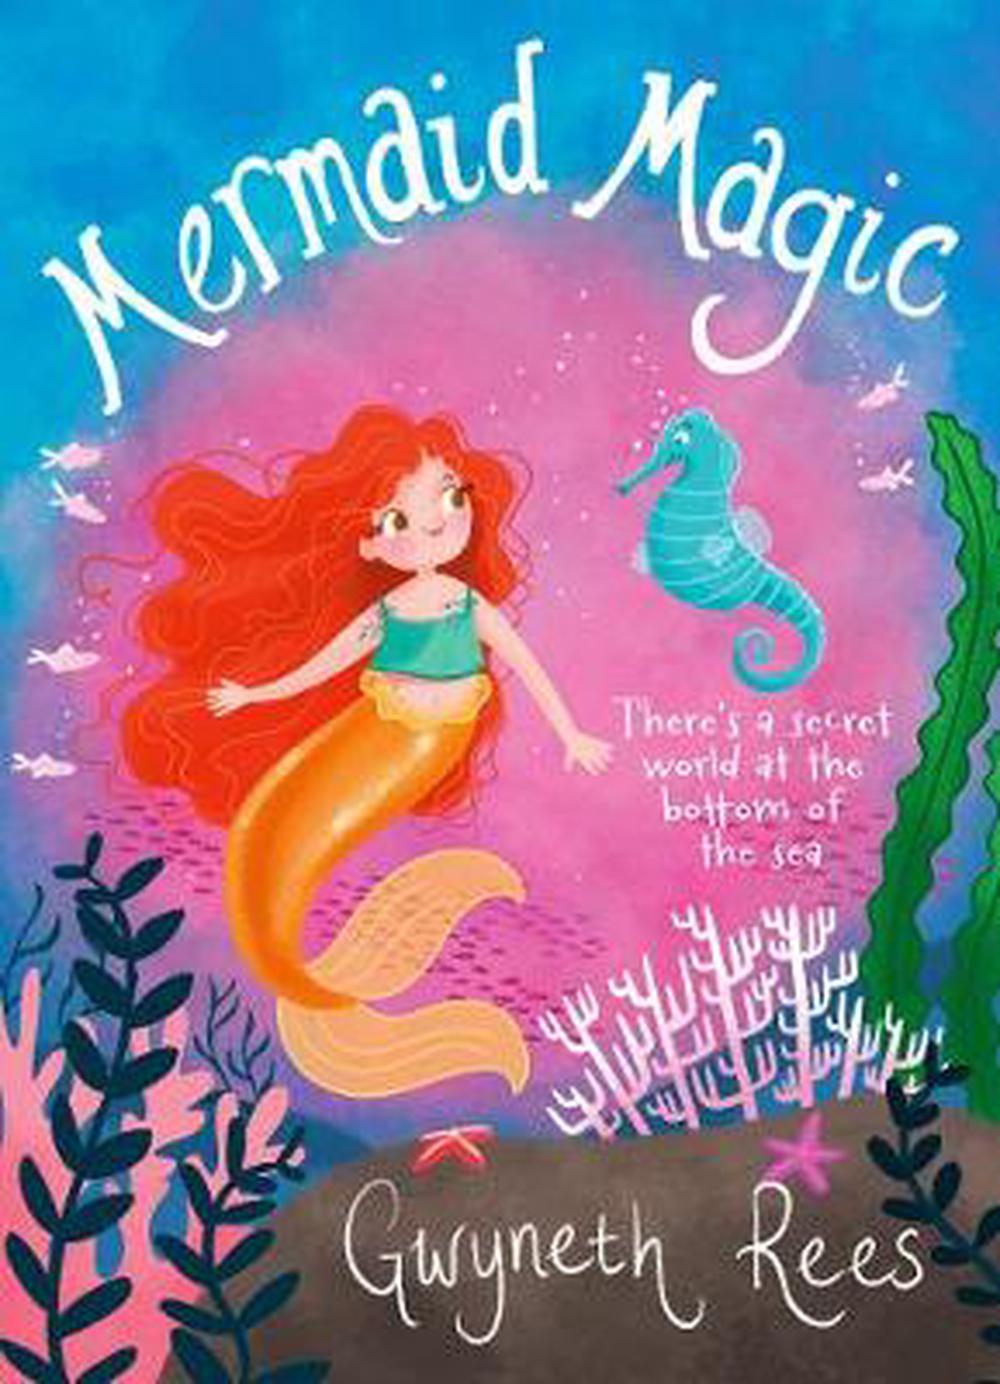 Mermaid Magic by Gwyneth Rees, Paperback, 9781509818693 | Buy online at ...